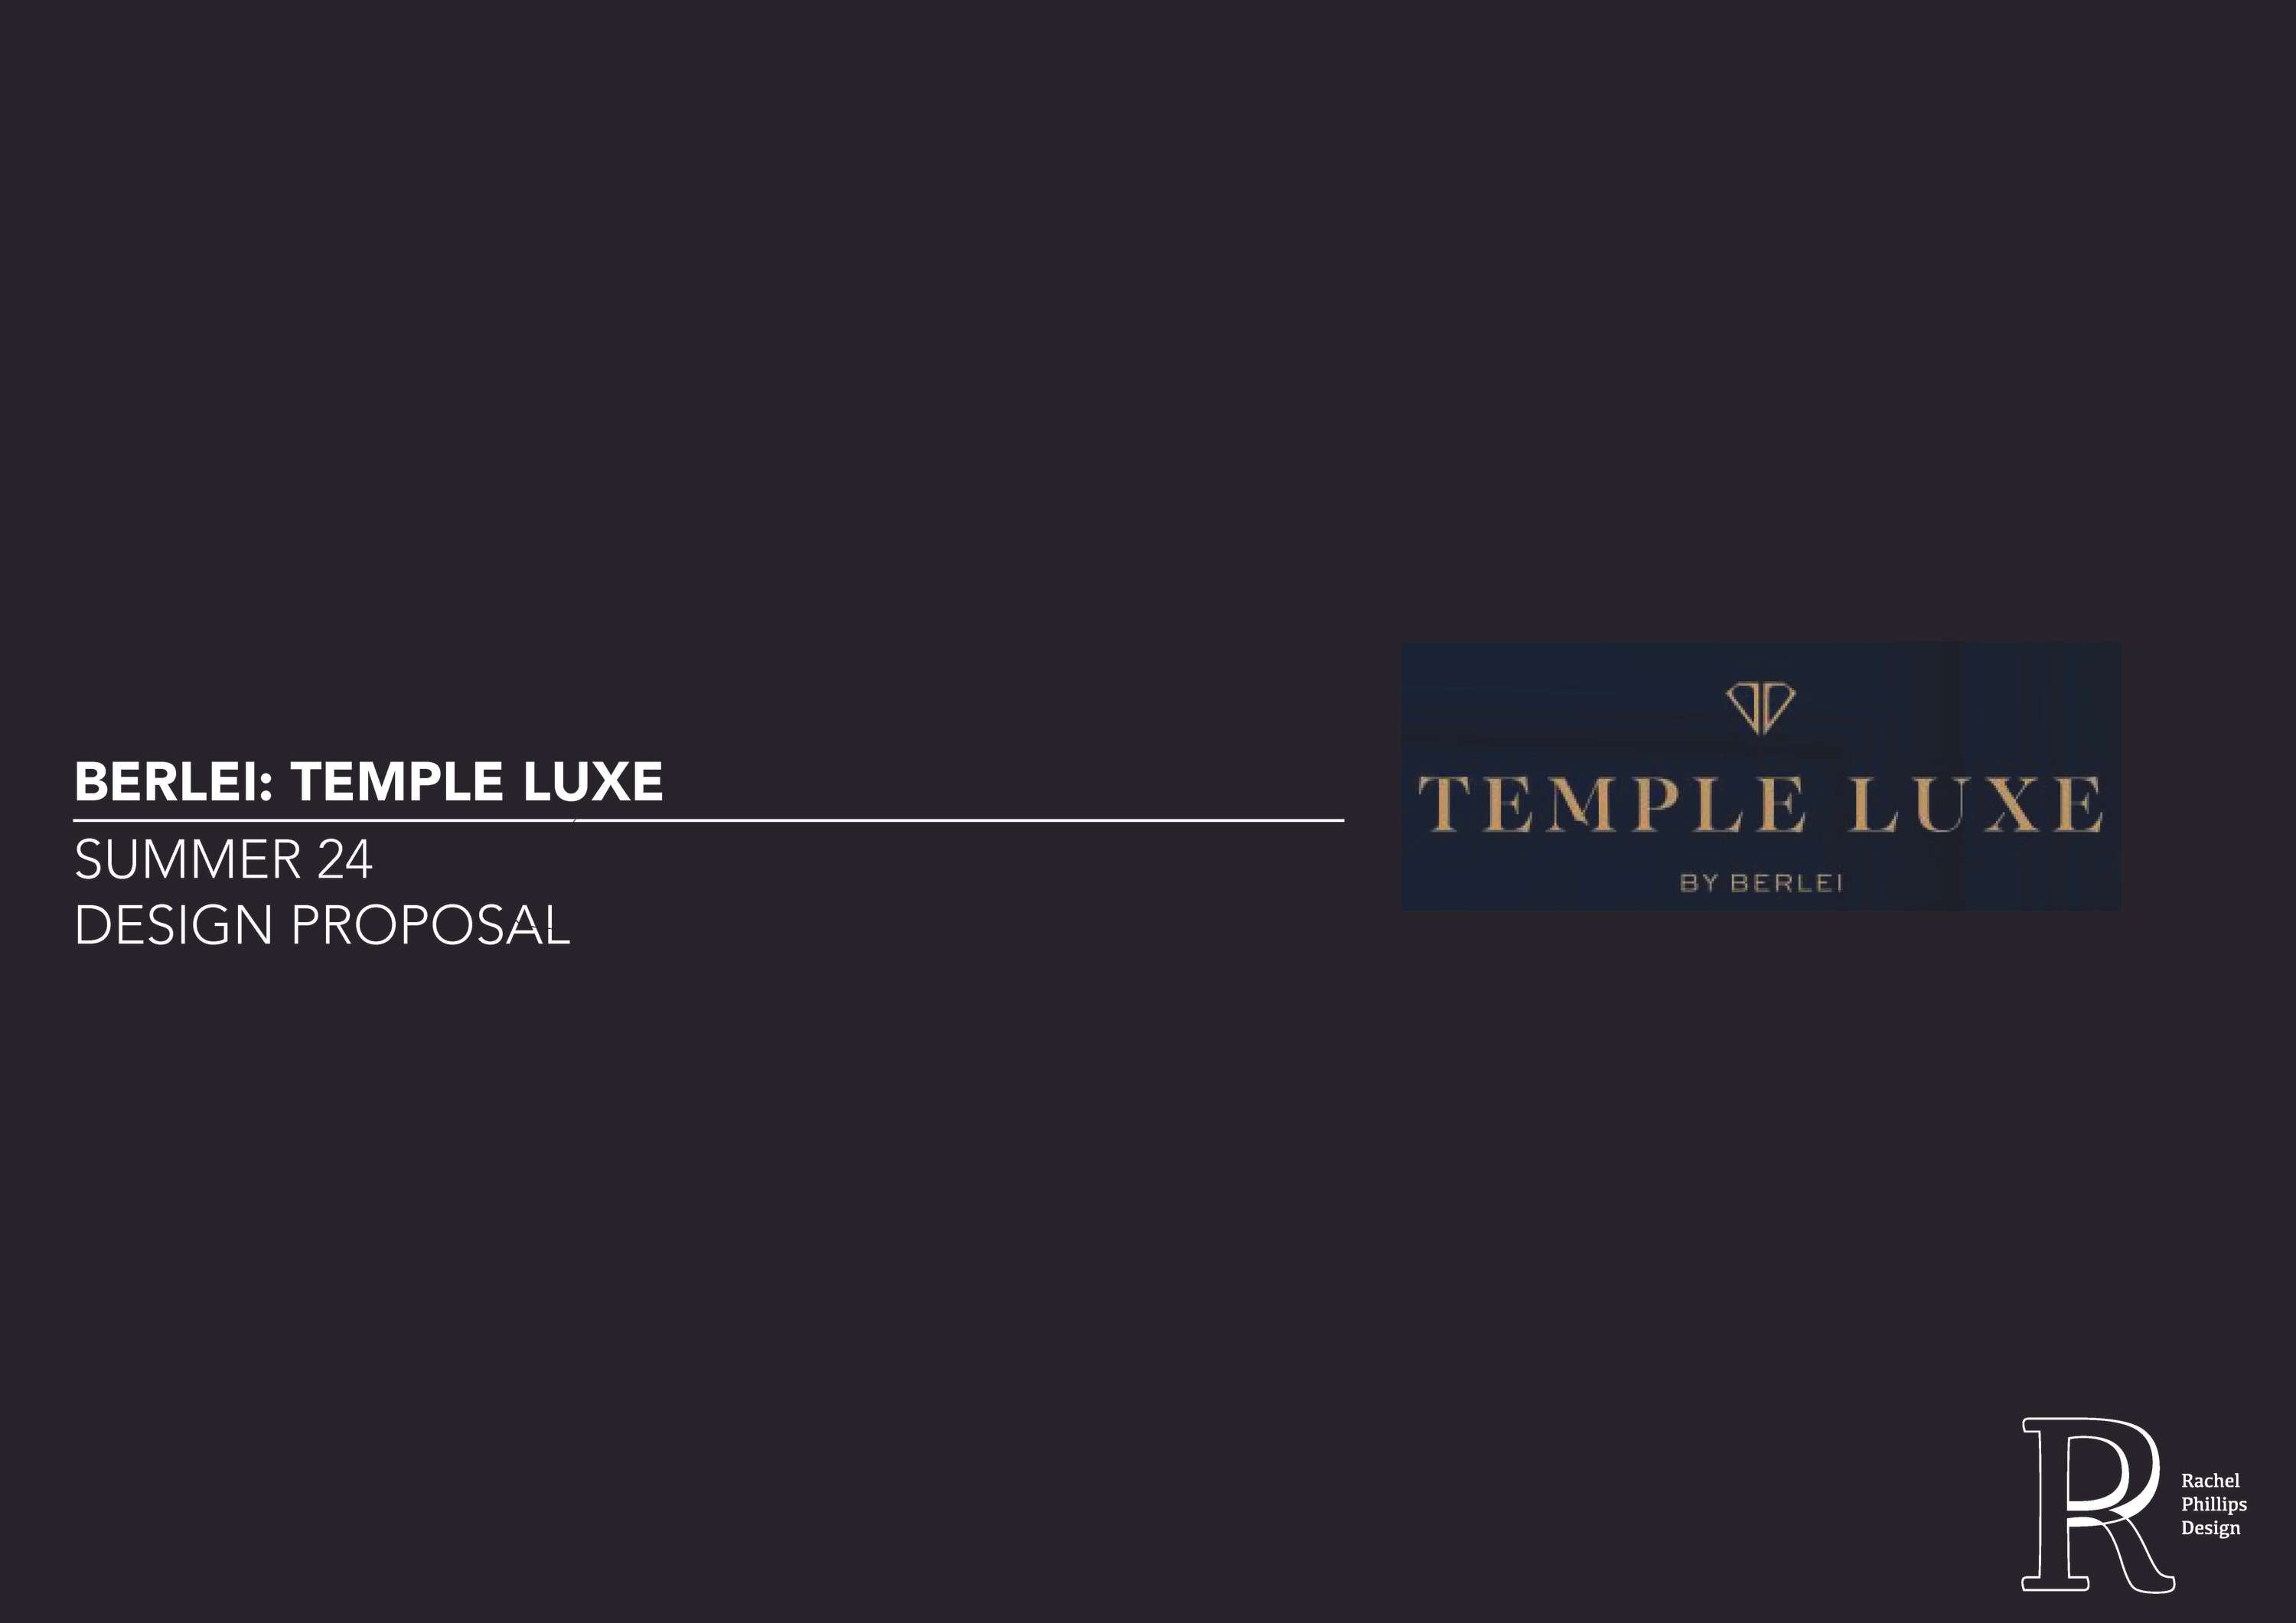 Temple Luxe by Berlei